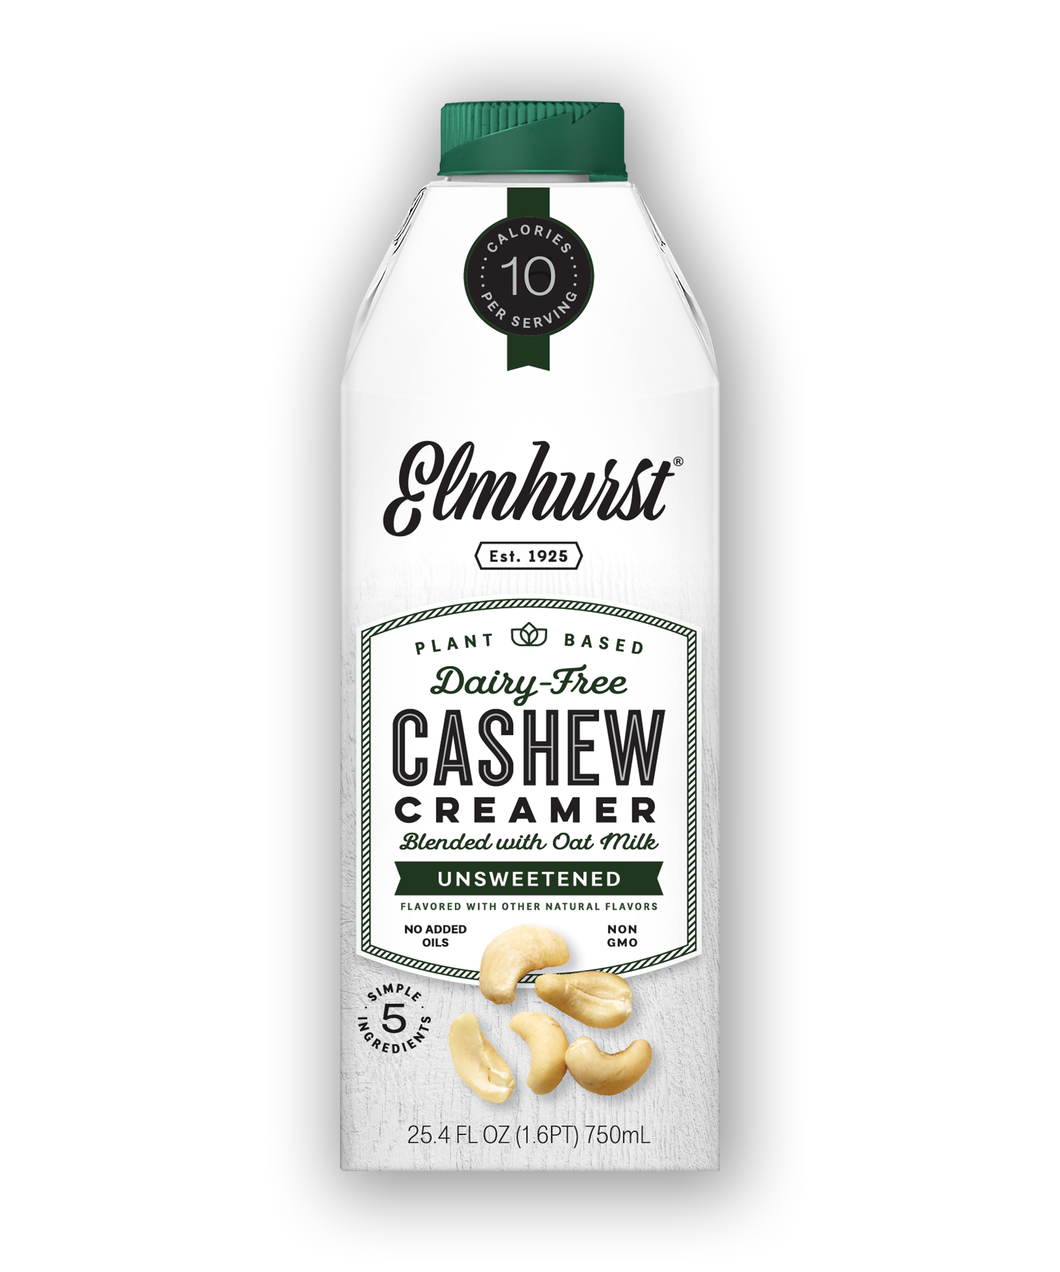  Elmhurst Unsweetened Cashew Creamer